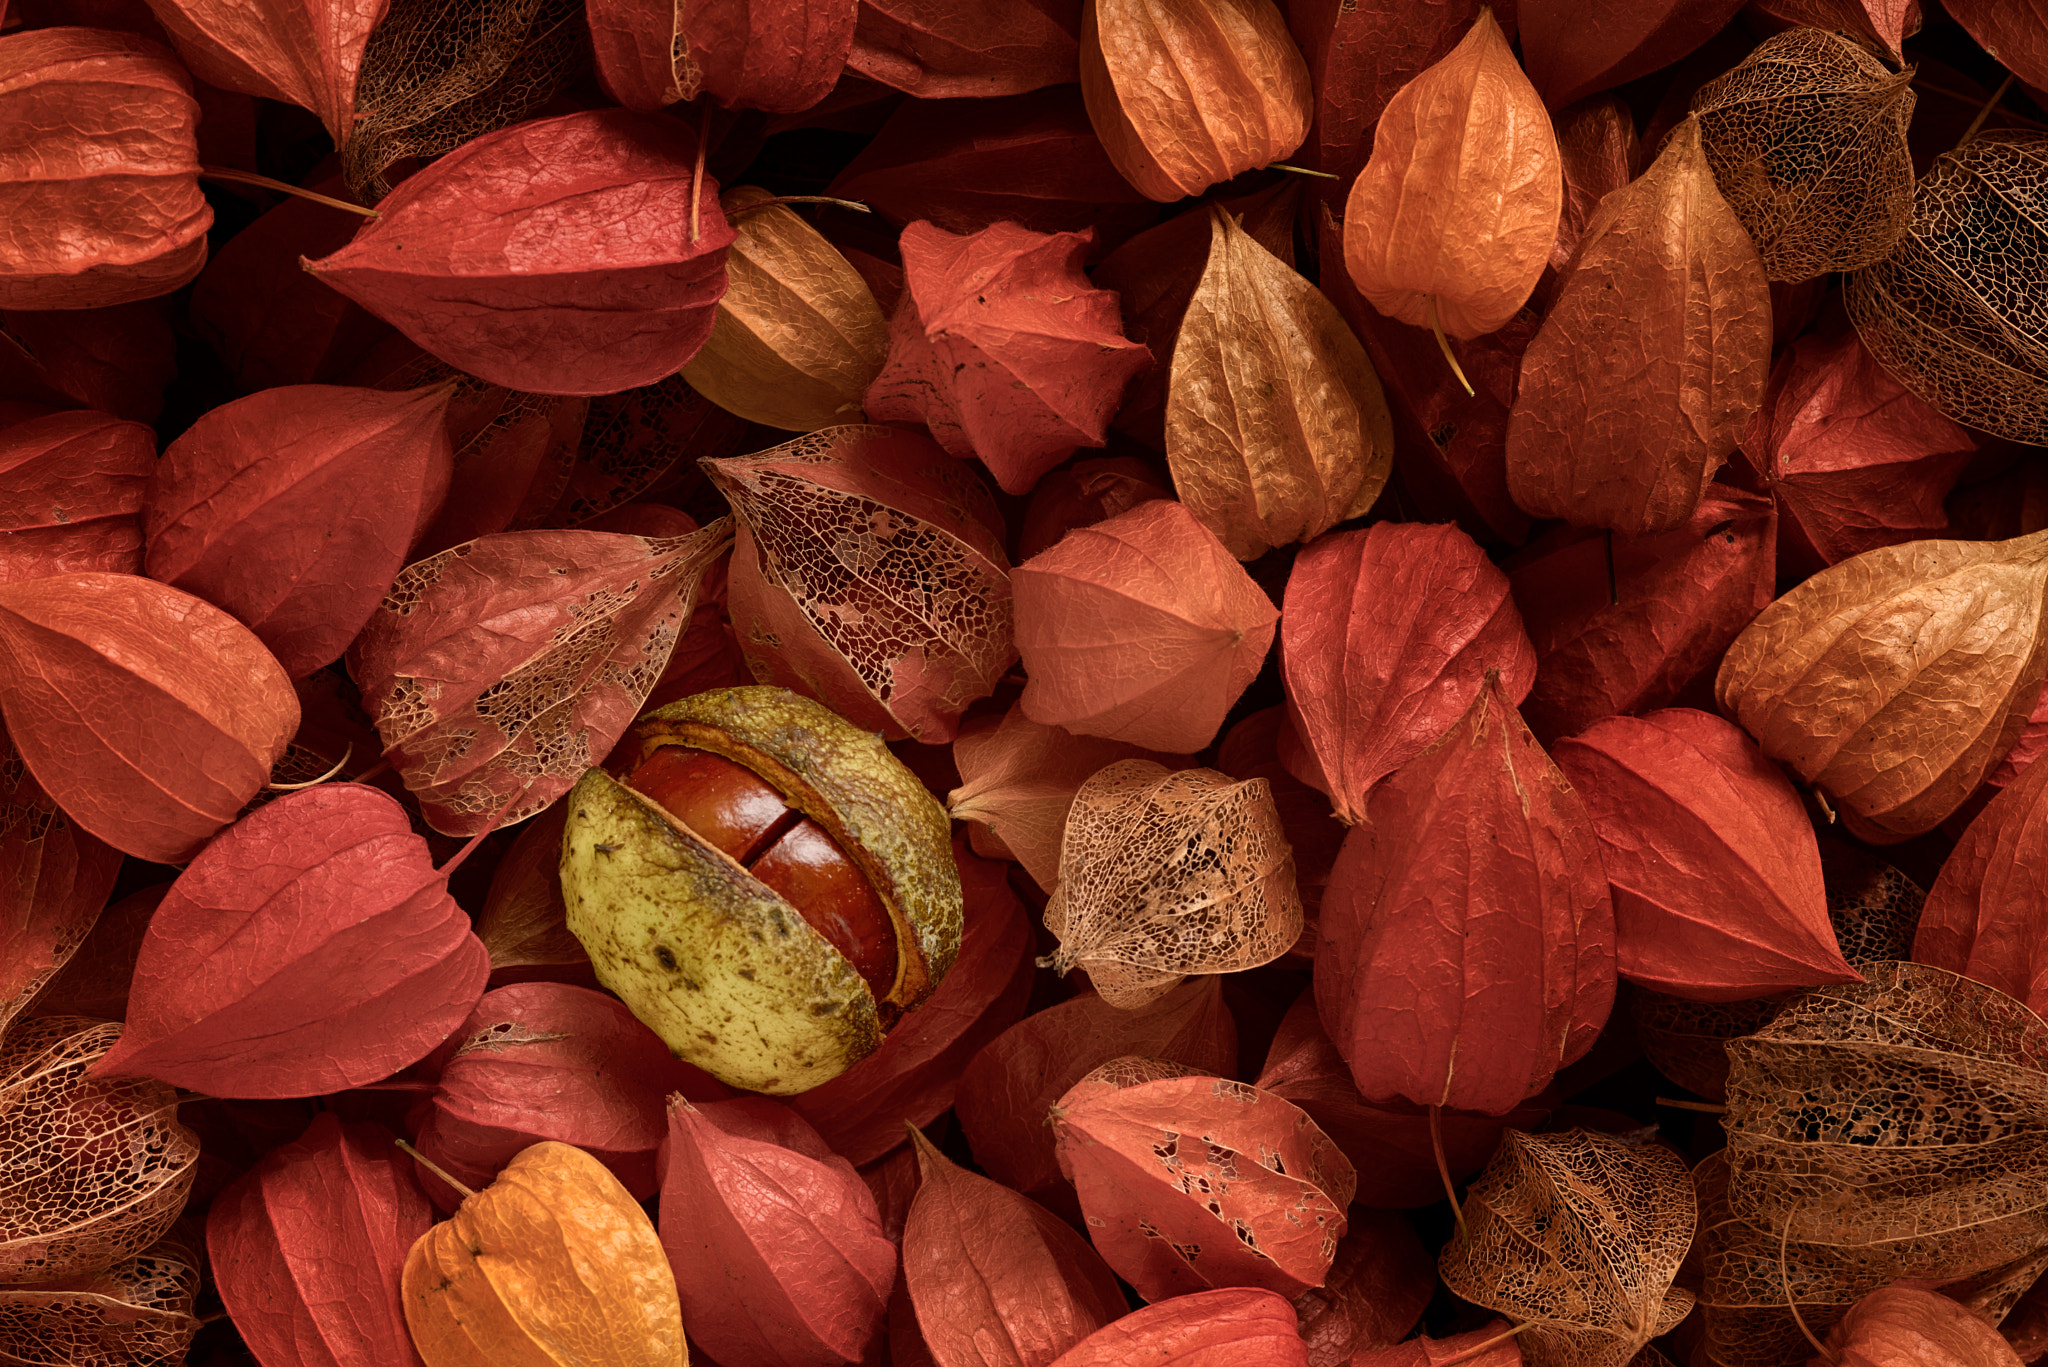 Pentax K-1 + Sigma sample photo. Autumn harvest photography